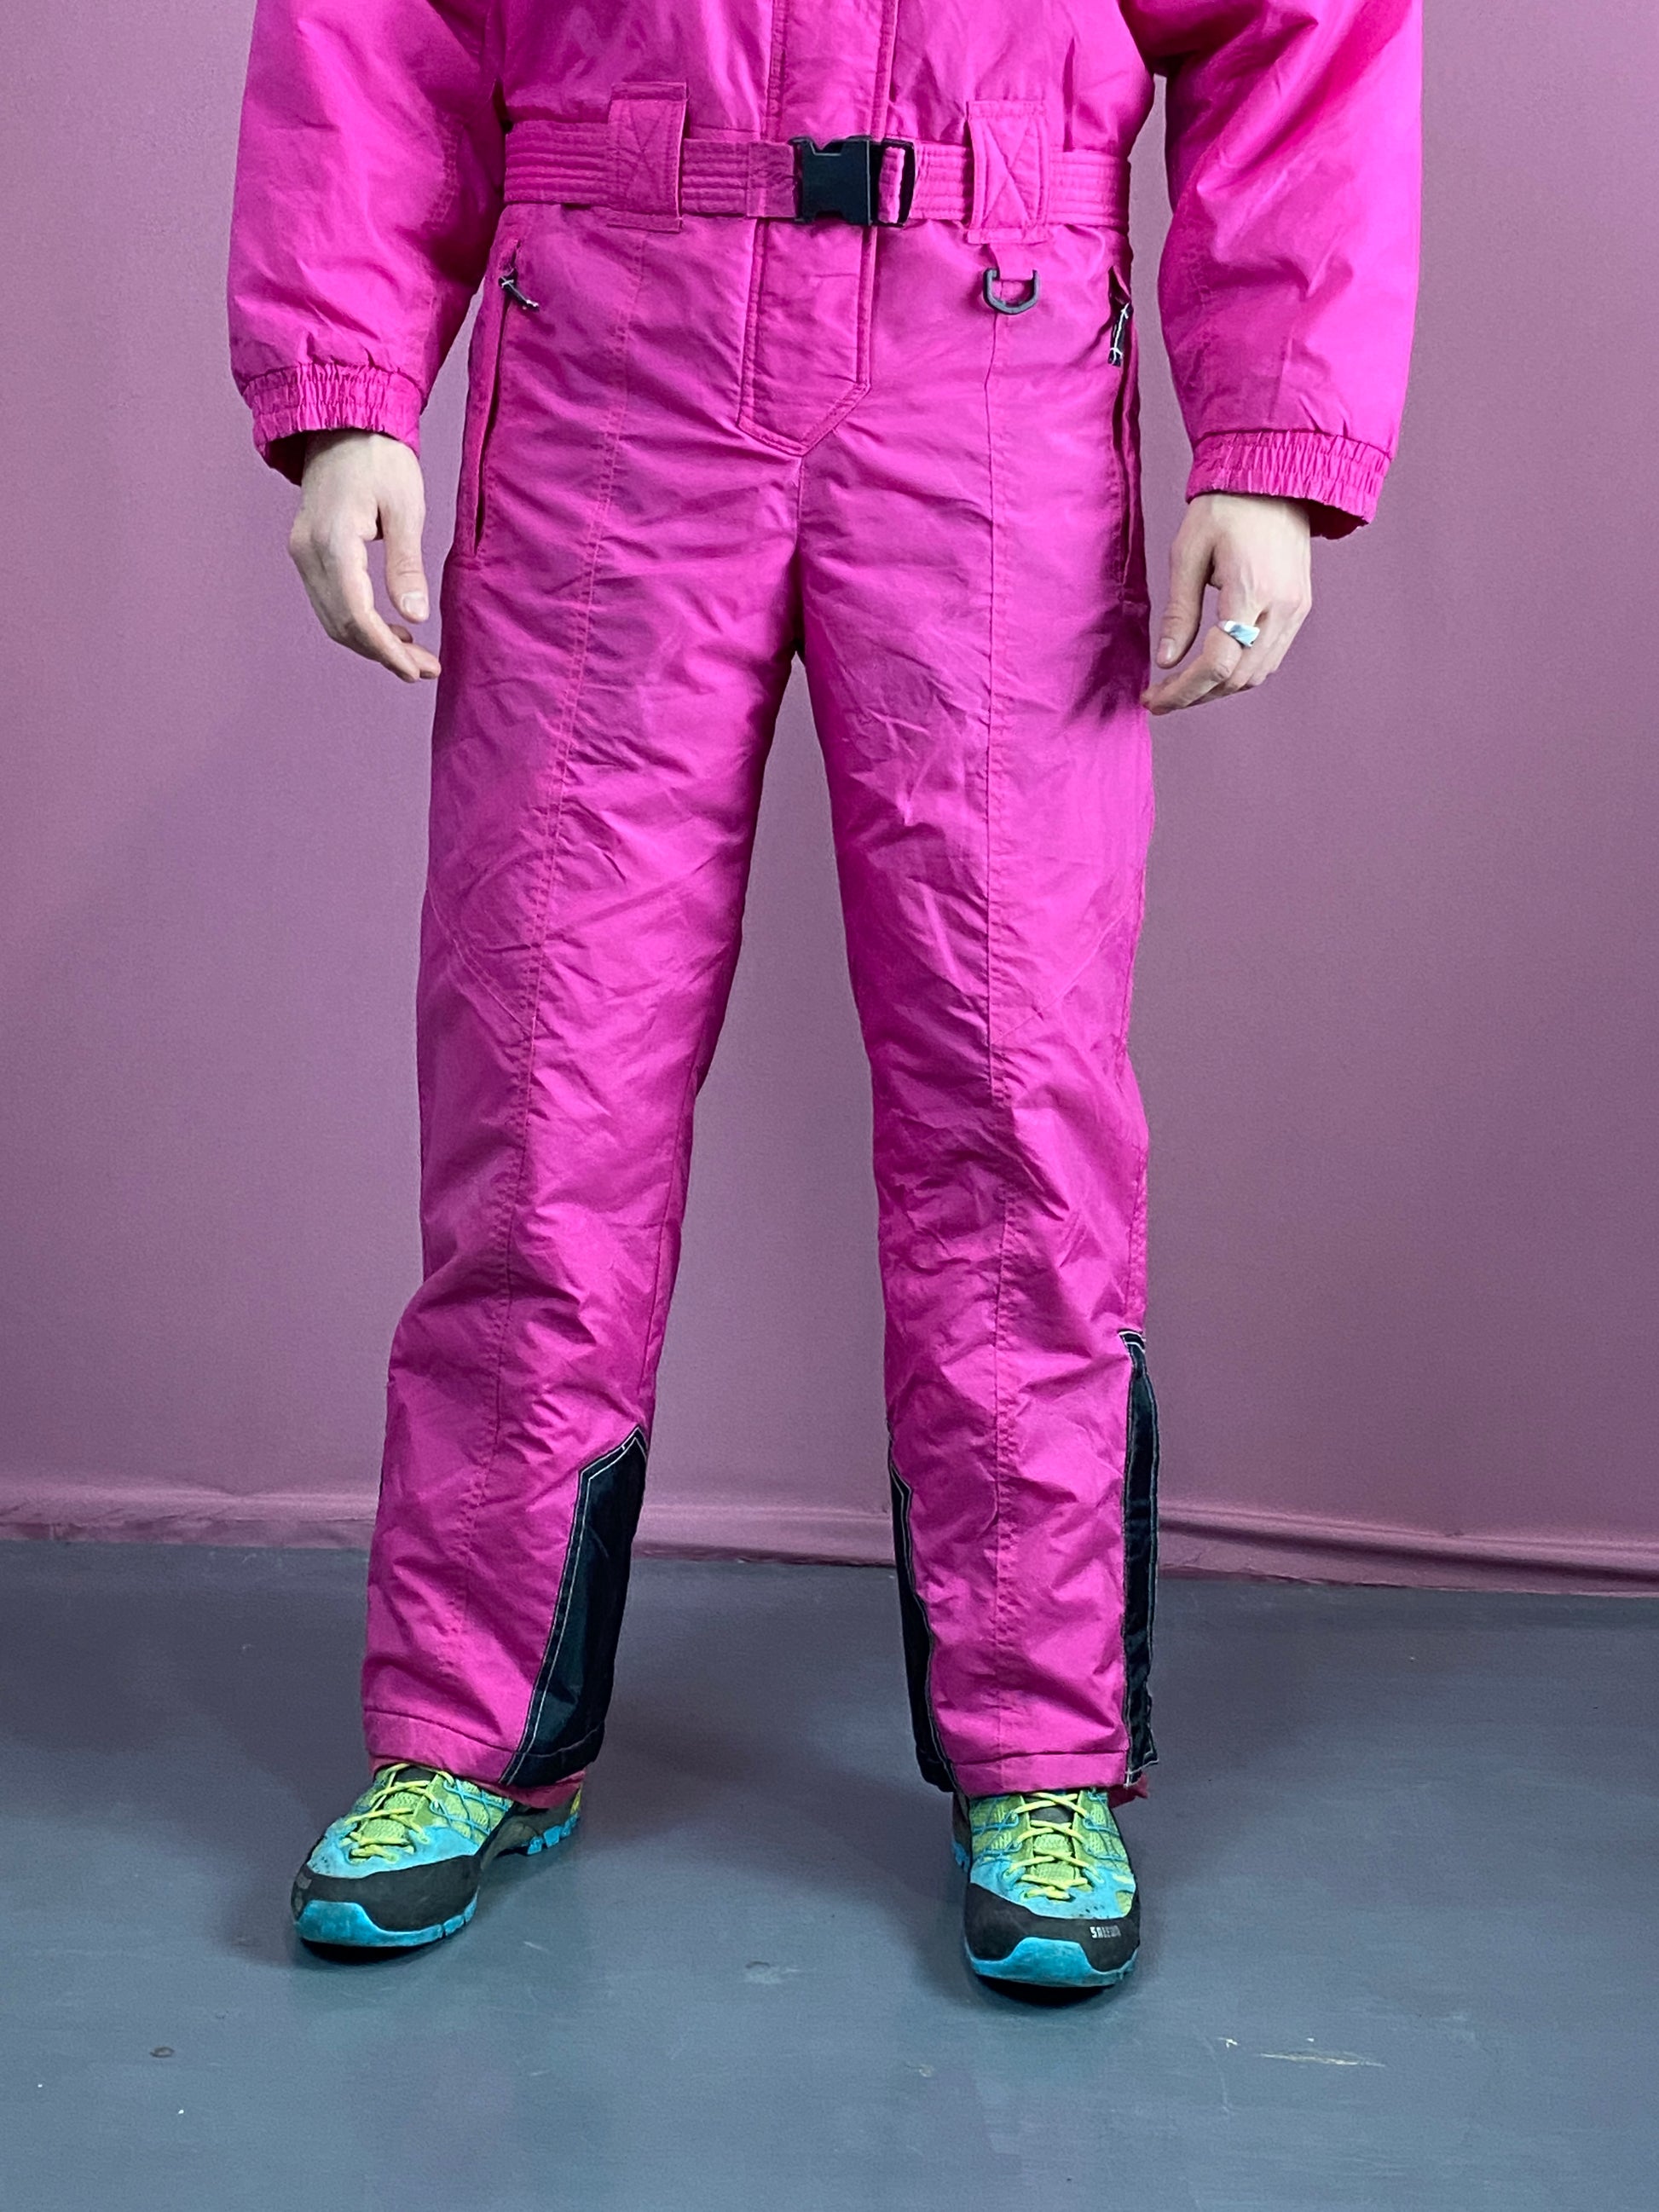 90s Snow Kool Vintage Men's One Piece Ski Suit - Medium Pink Nylon